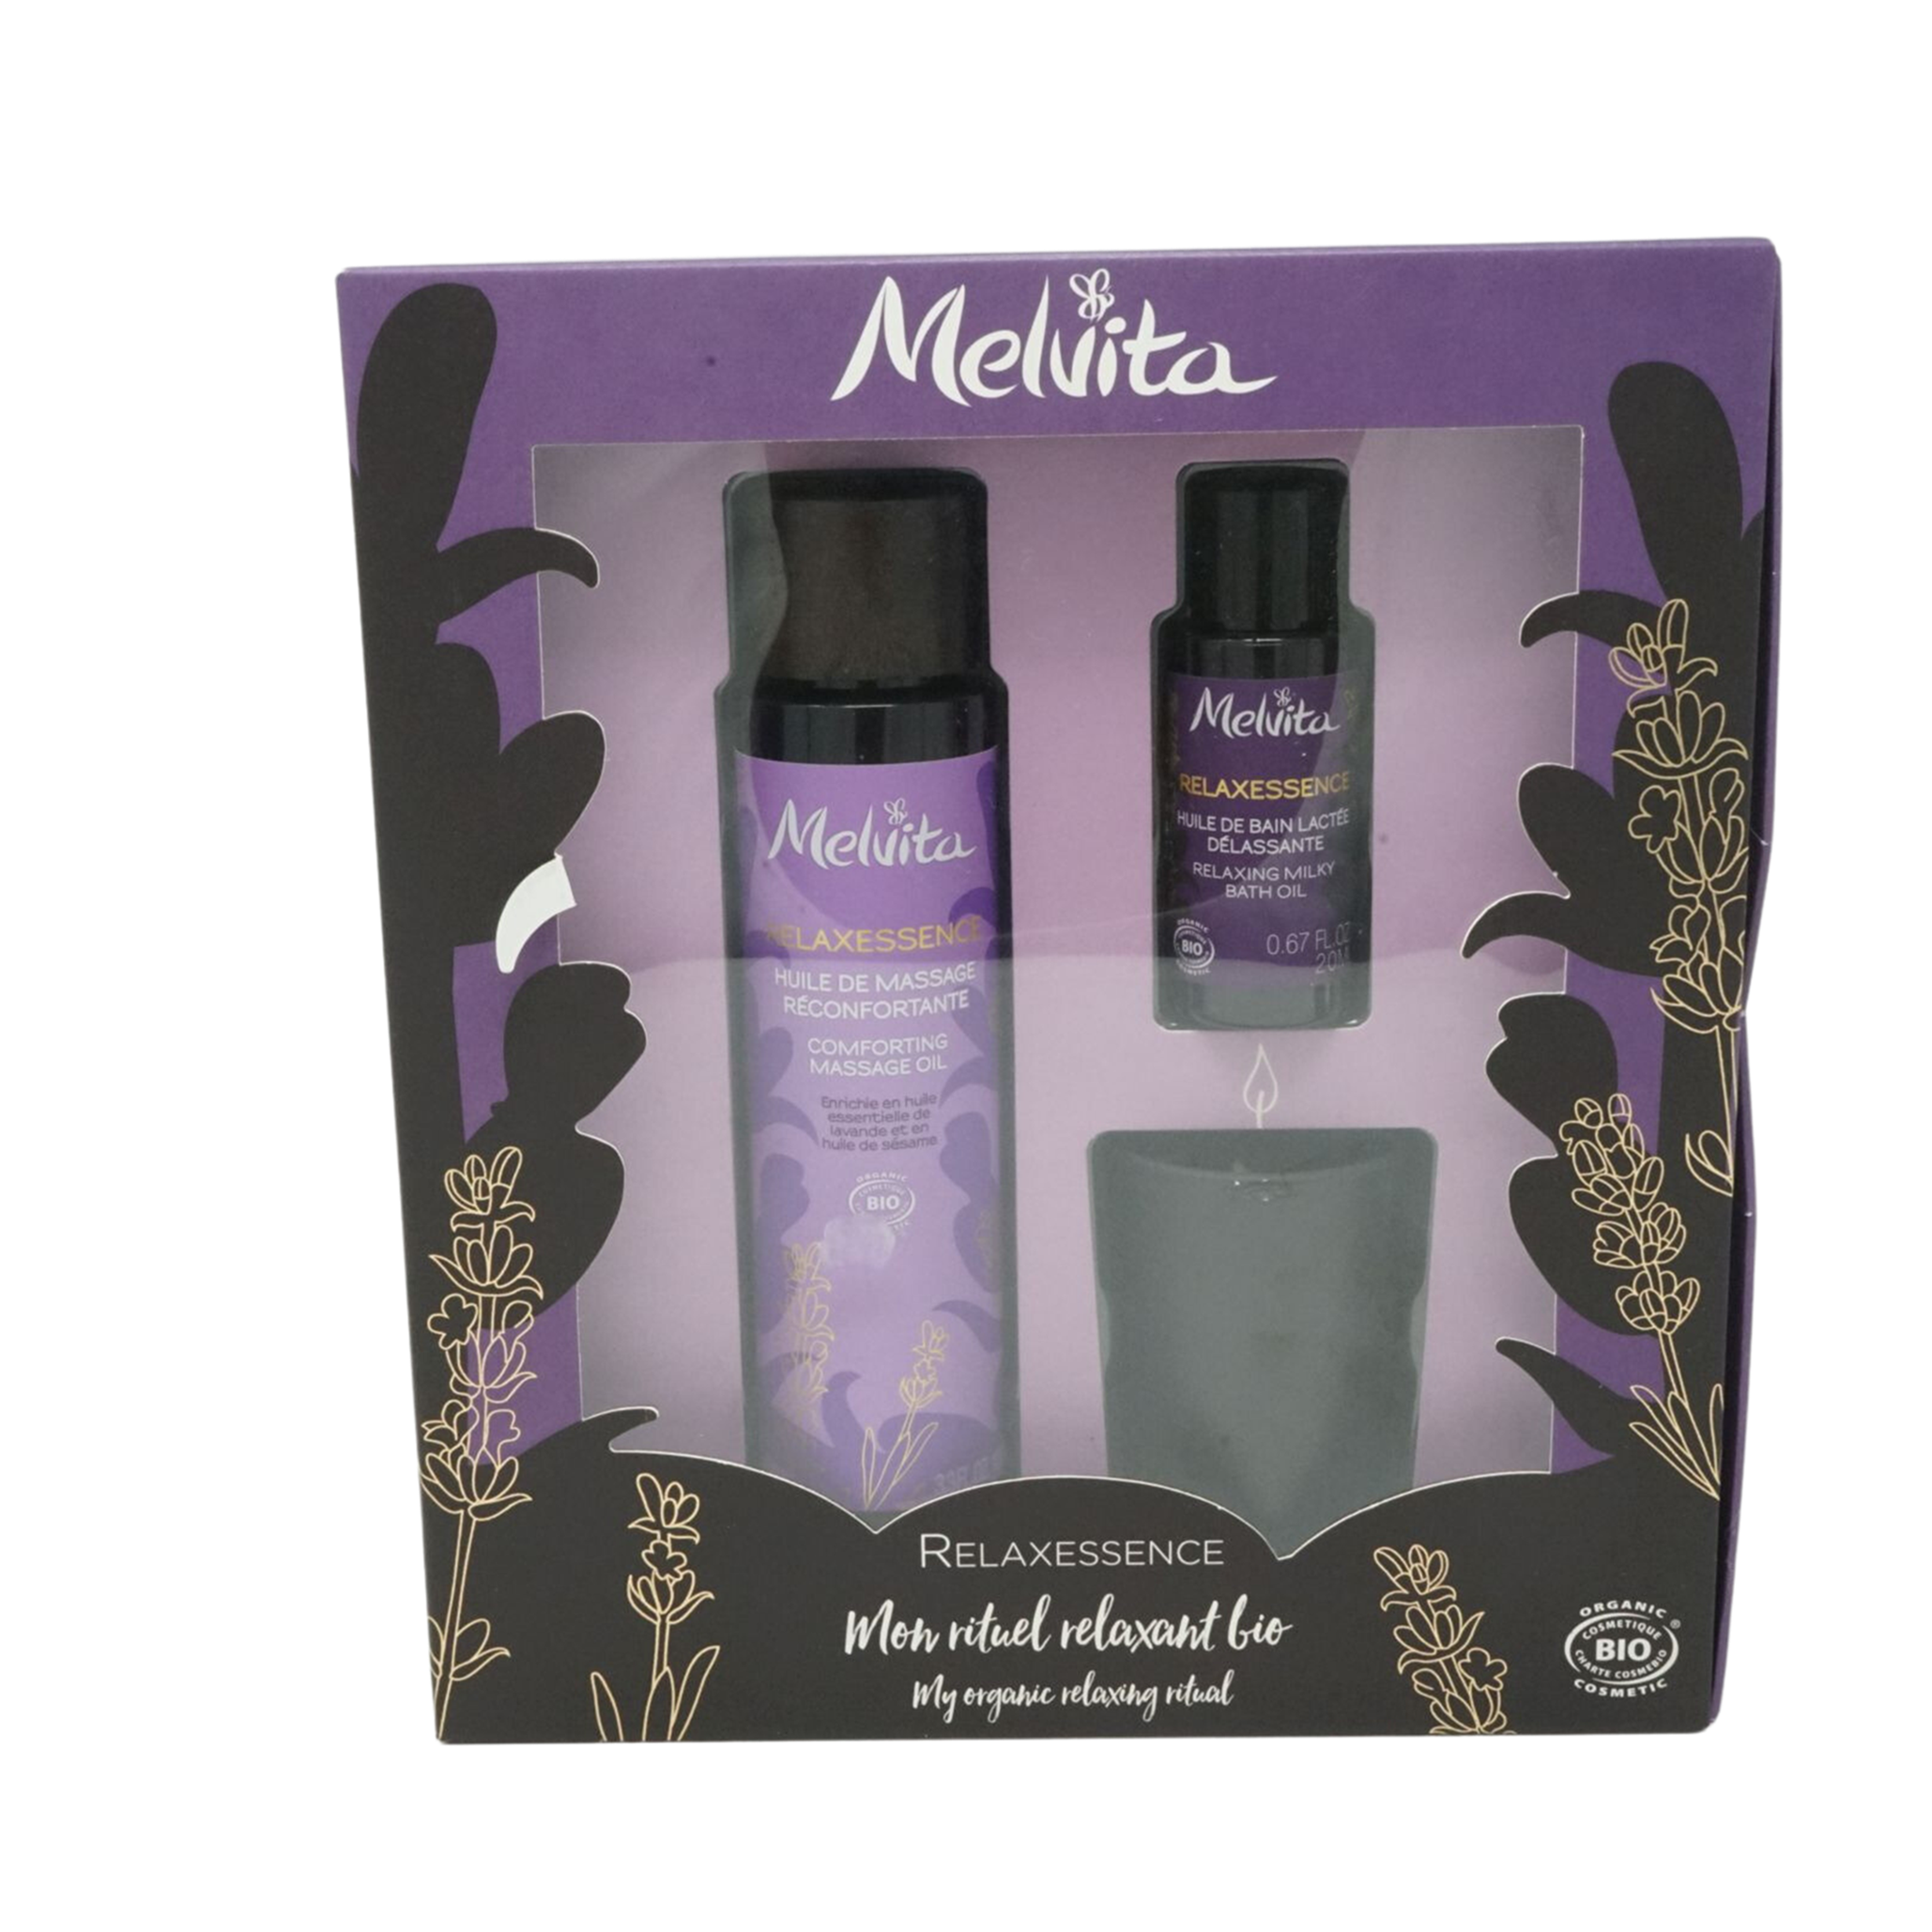 Melvita Relaxessence Massage oil 100ml + Duftkerze 30g + Bath Oil 20ml